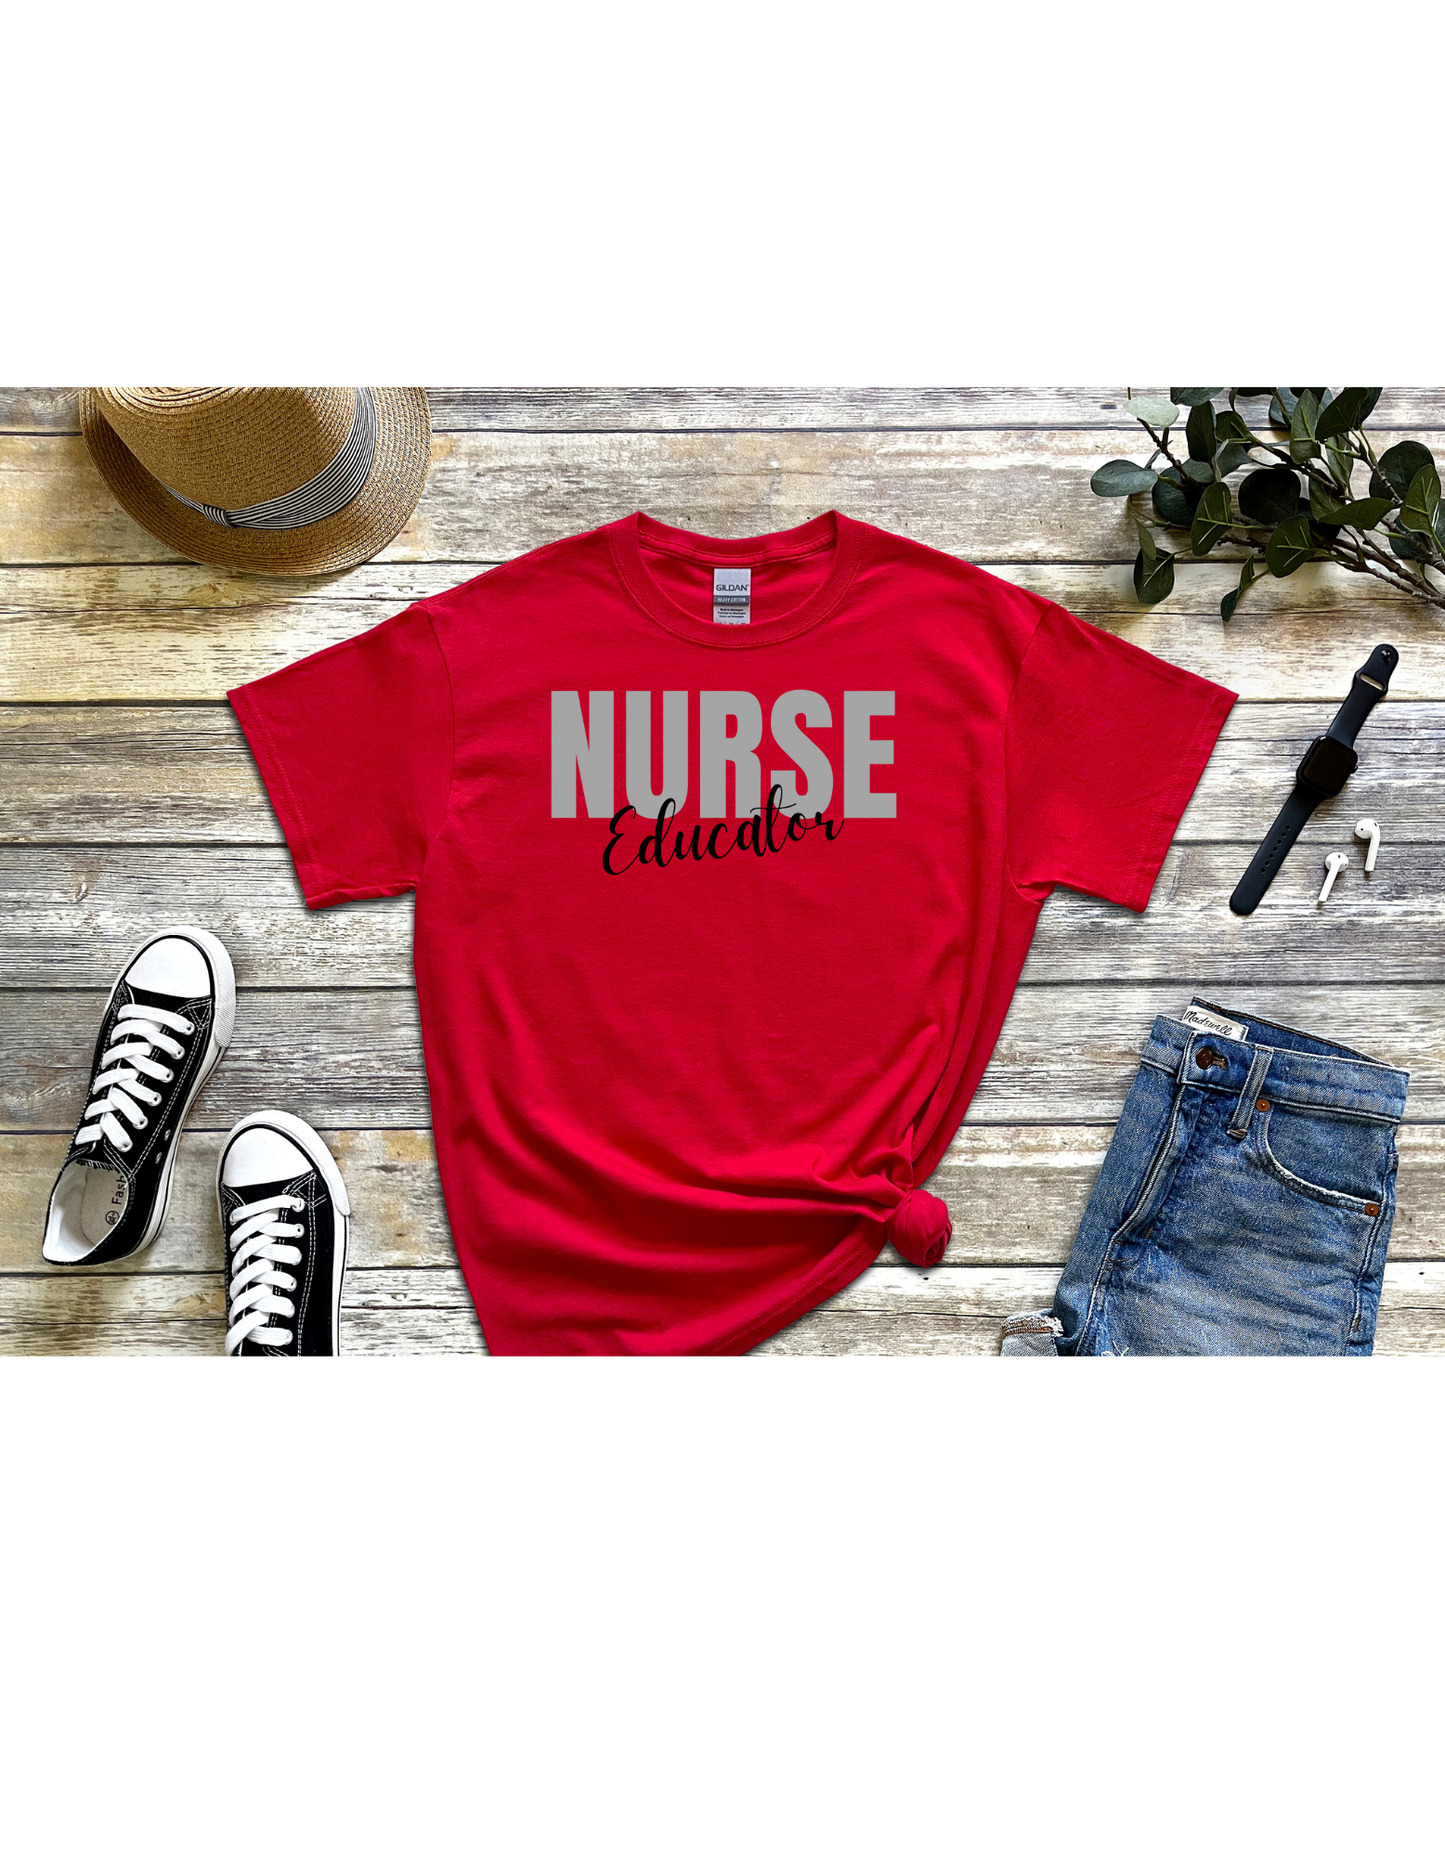 Nurse Educator Nursing T-Shirt, Healthcare Heros Shirt, Nurse Tee